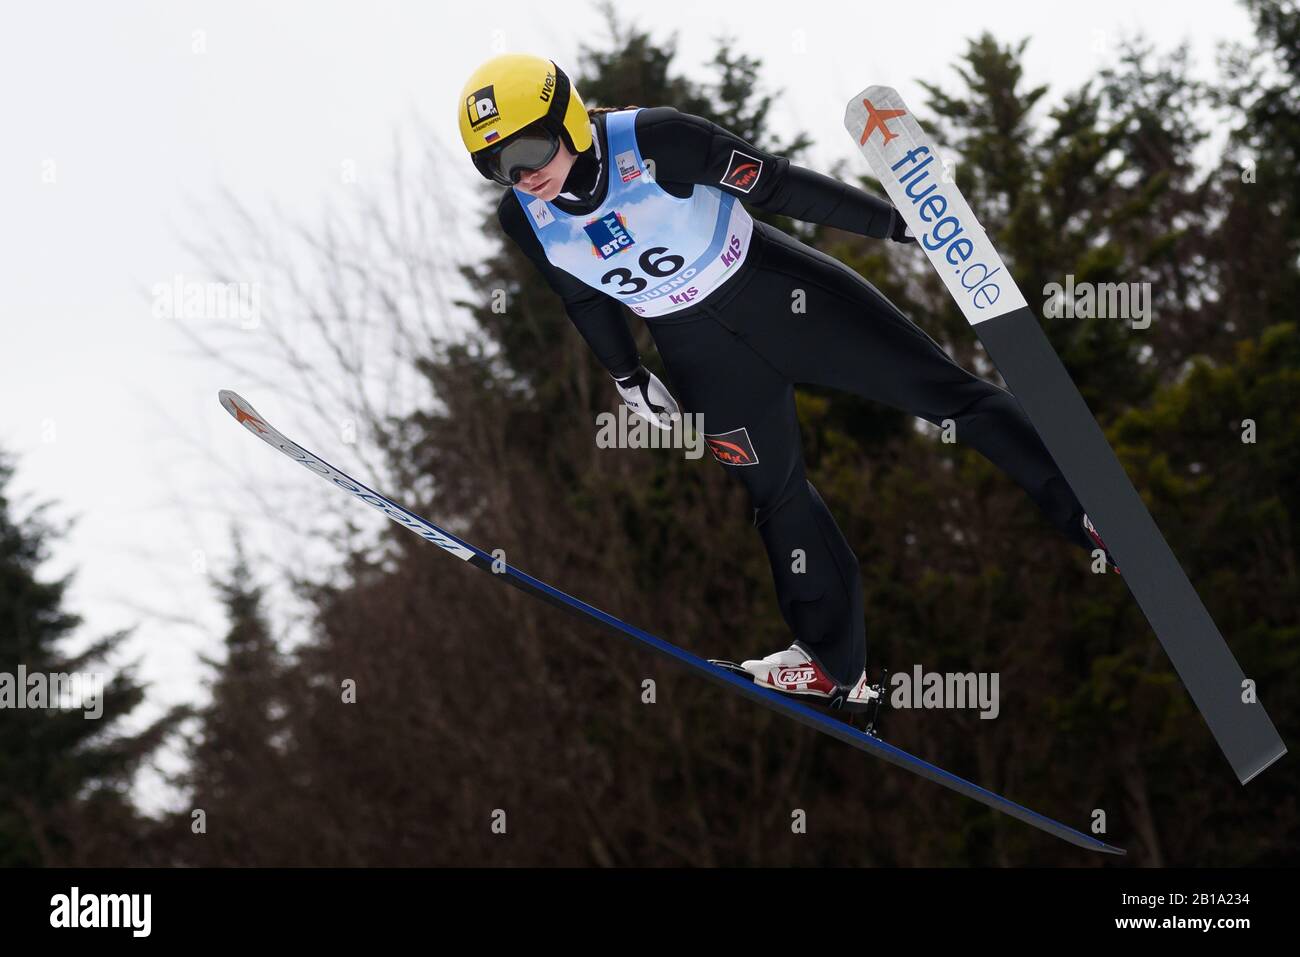 Anna Shpyneva of Russia competes during the FIS Ski Jumping World Cup Ljubno 2020  February 23, 2020  in Ljubno, Slovenia. (Photo by Rok Rakun/Pacific Press/Sipa USA) Stock Photo